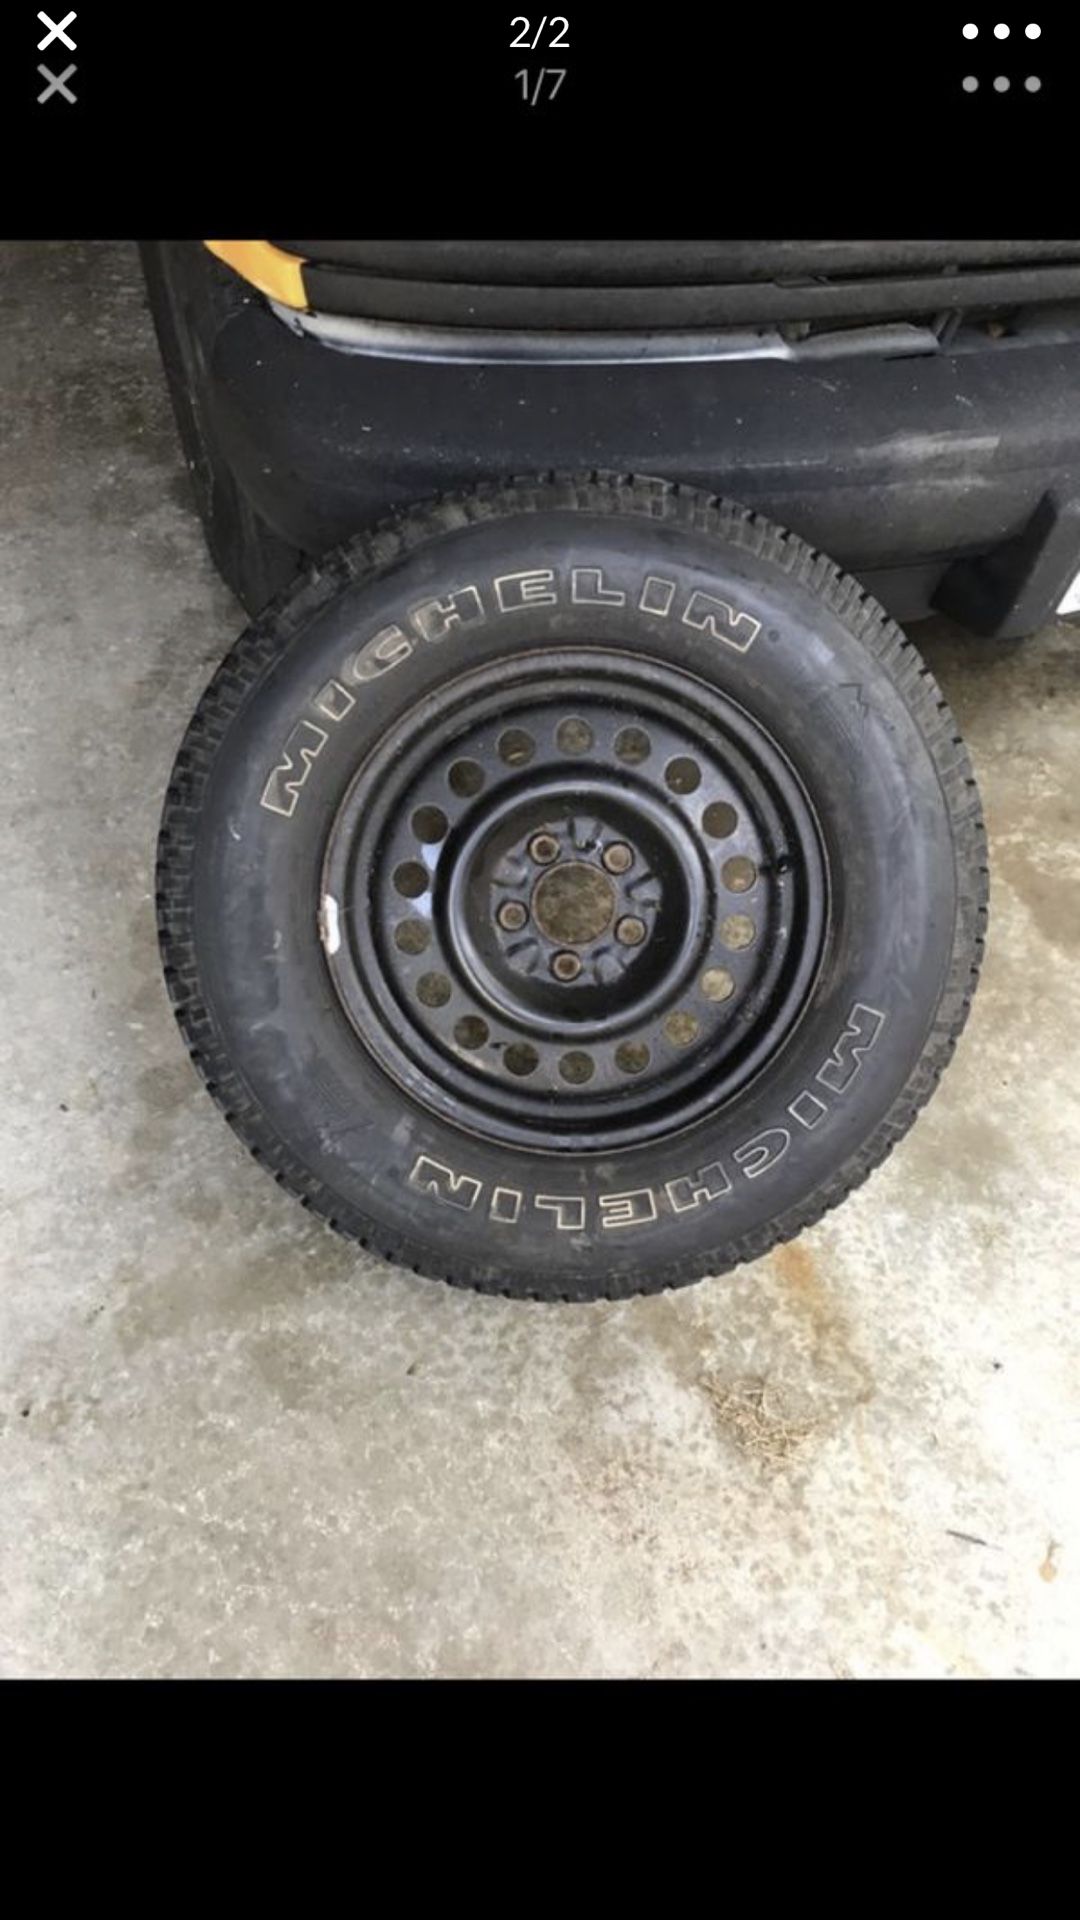 Brand new tire $55